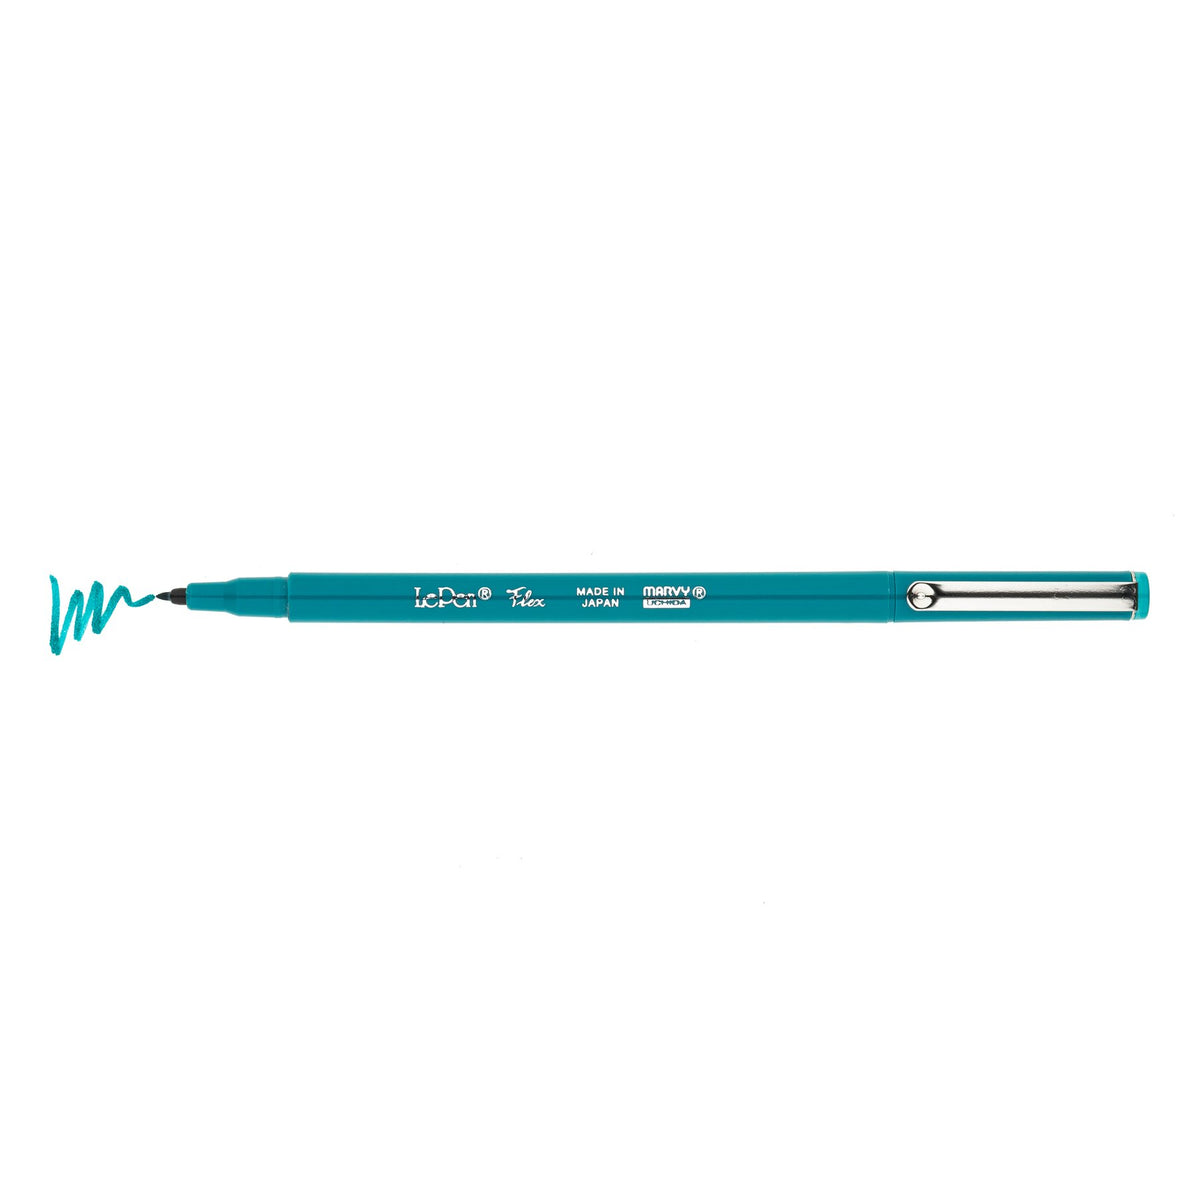 Marvy Uchida - Brush Pen - Le Pen Flex - Teal #73